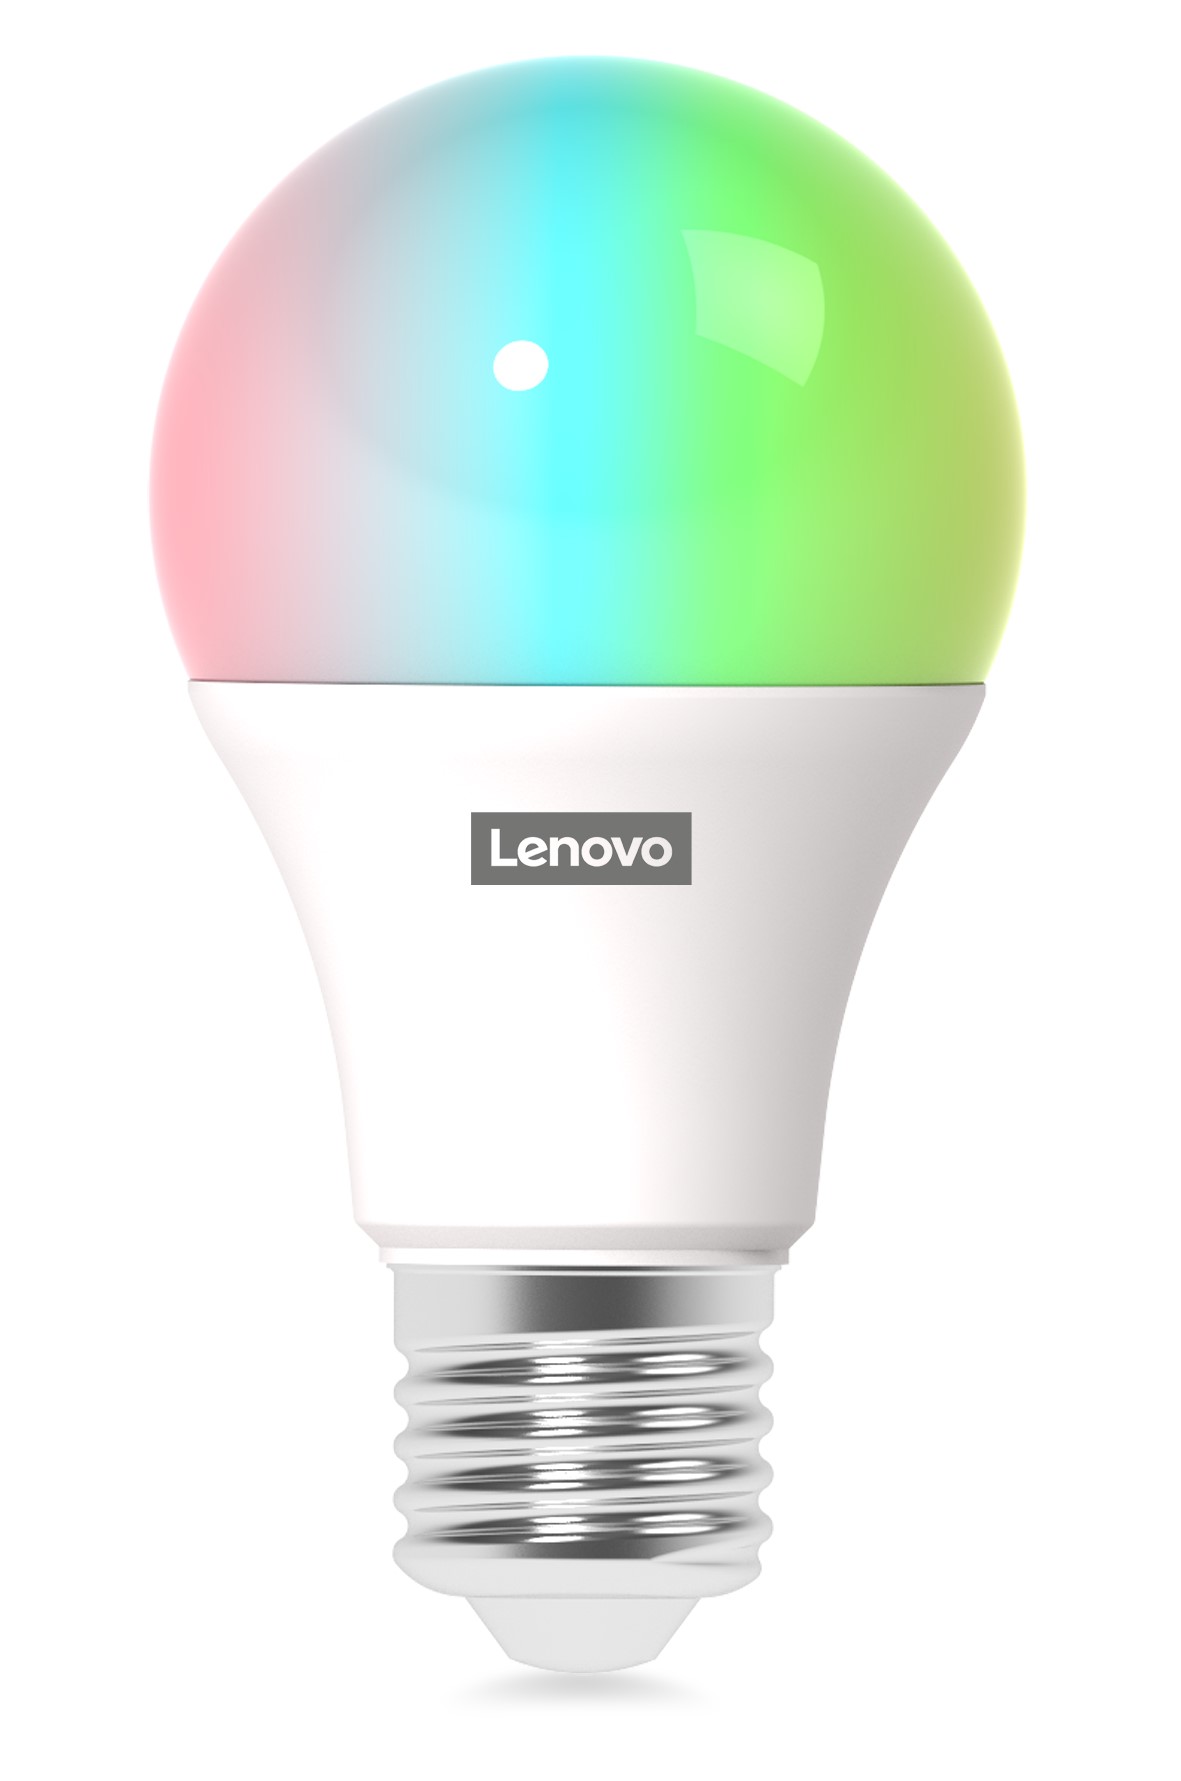 Lenovo Smart Clock Gen 2 - Grey + Color Smart Bulb - image 6 of 7